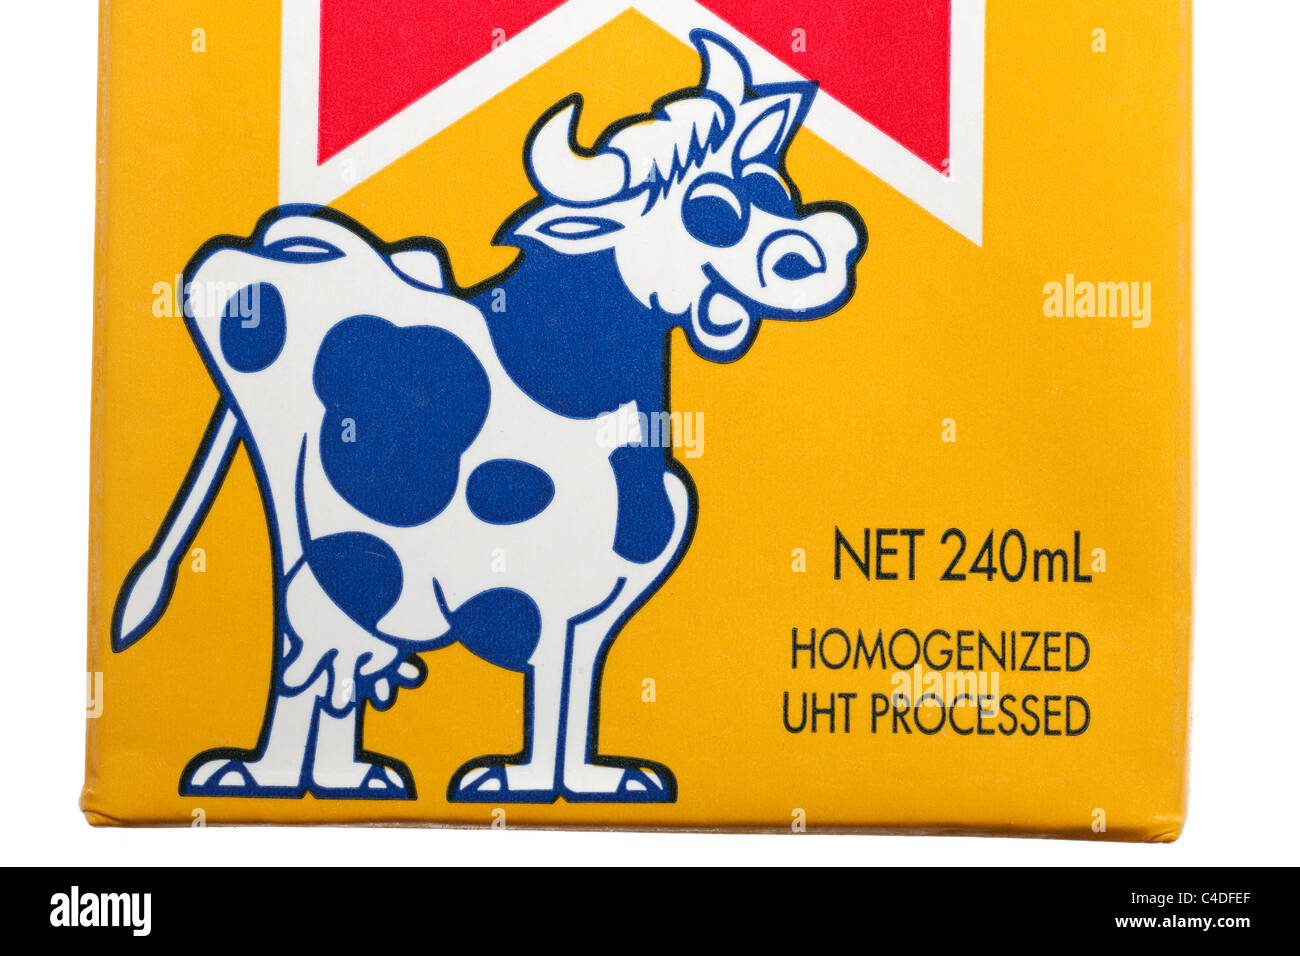 Homogenized UHT processed on a 240ml carton of Serge Island Egg Nog Stock Photo